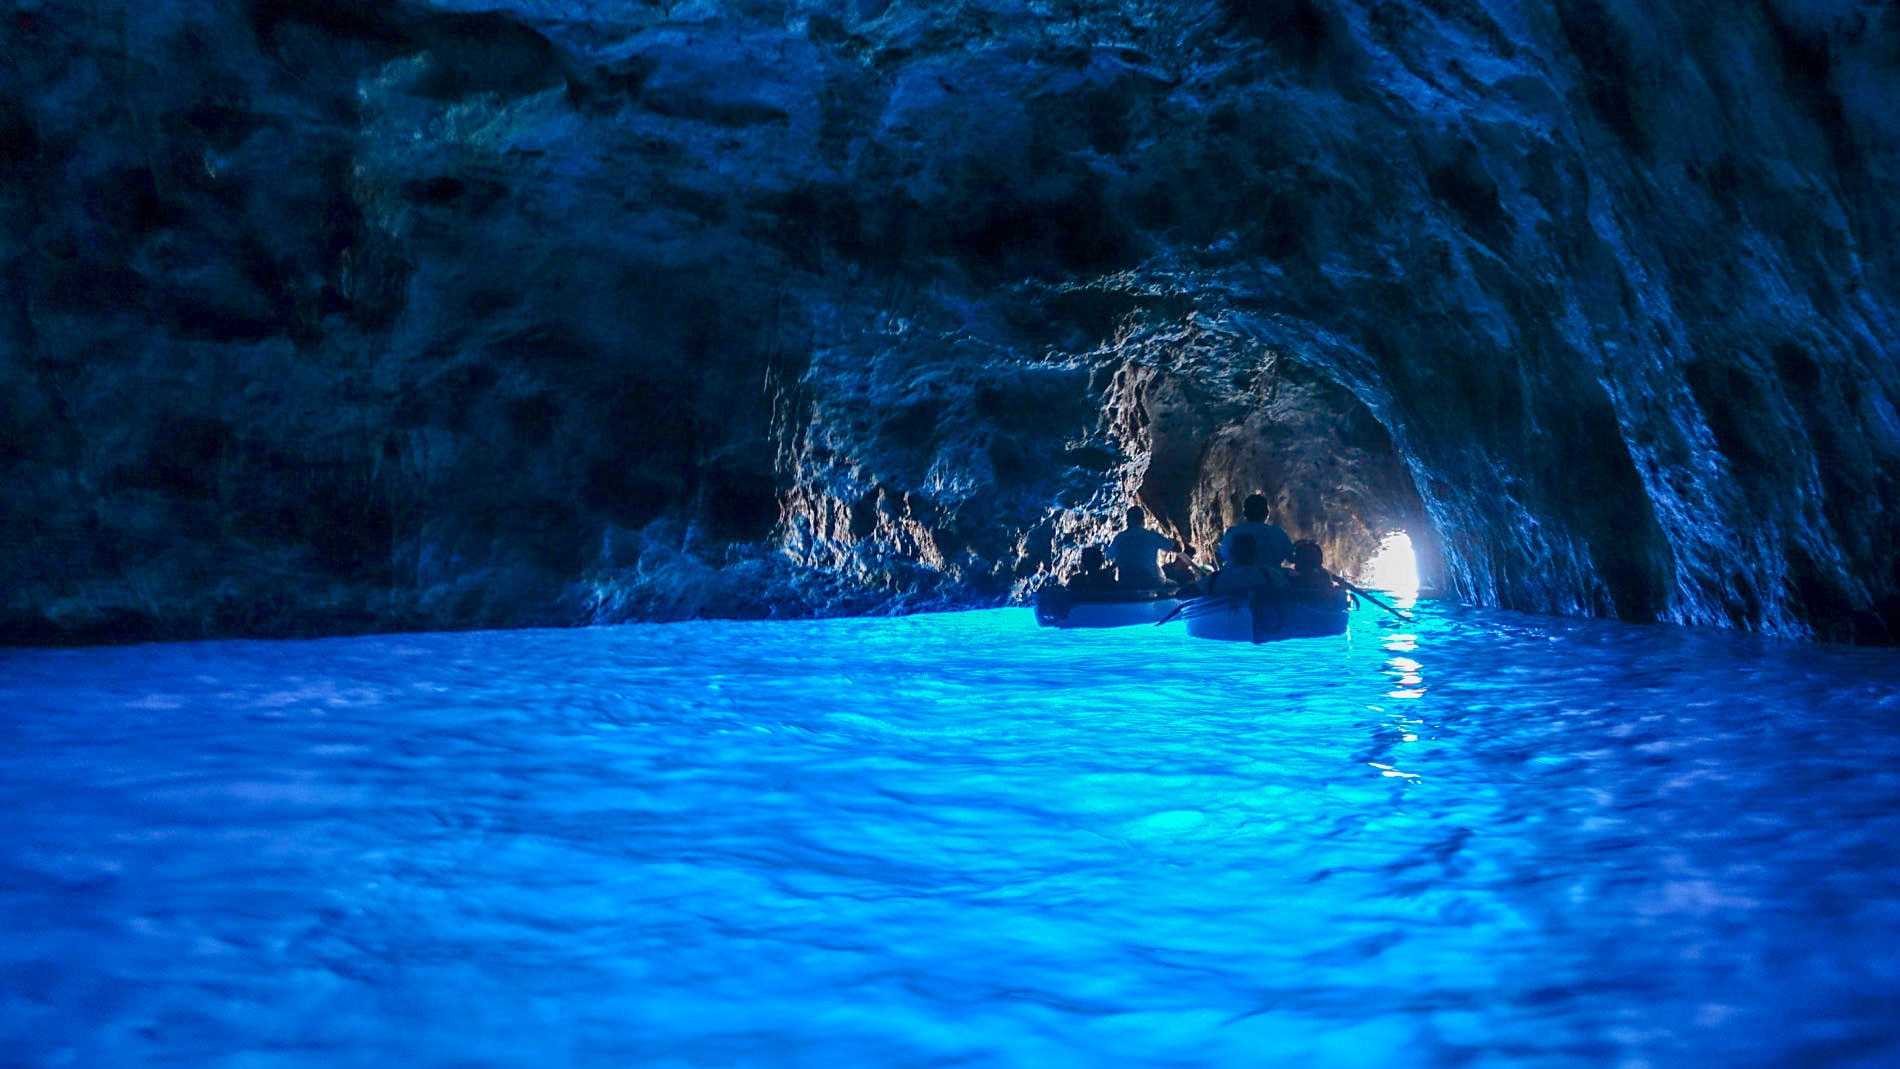 Capri blue Grotto boat tour from Sorrento